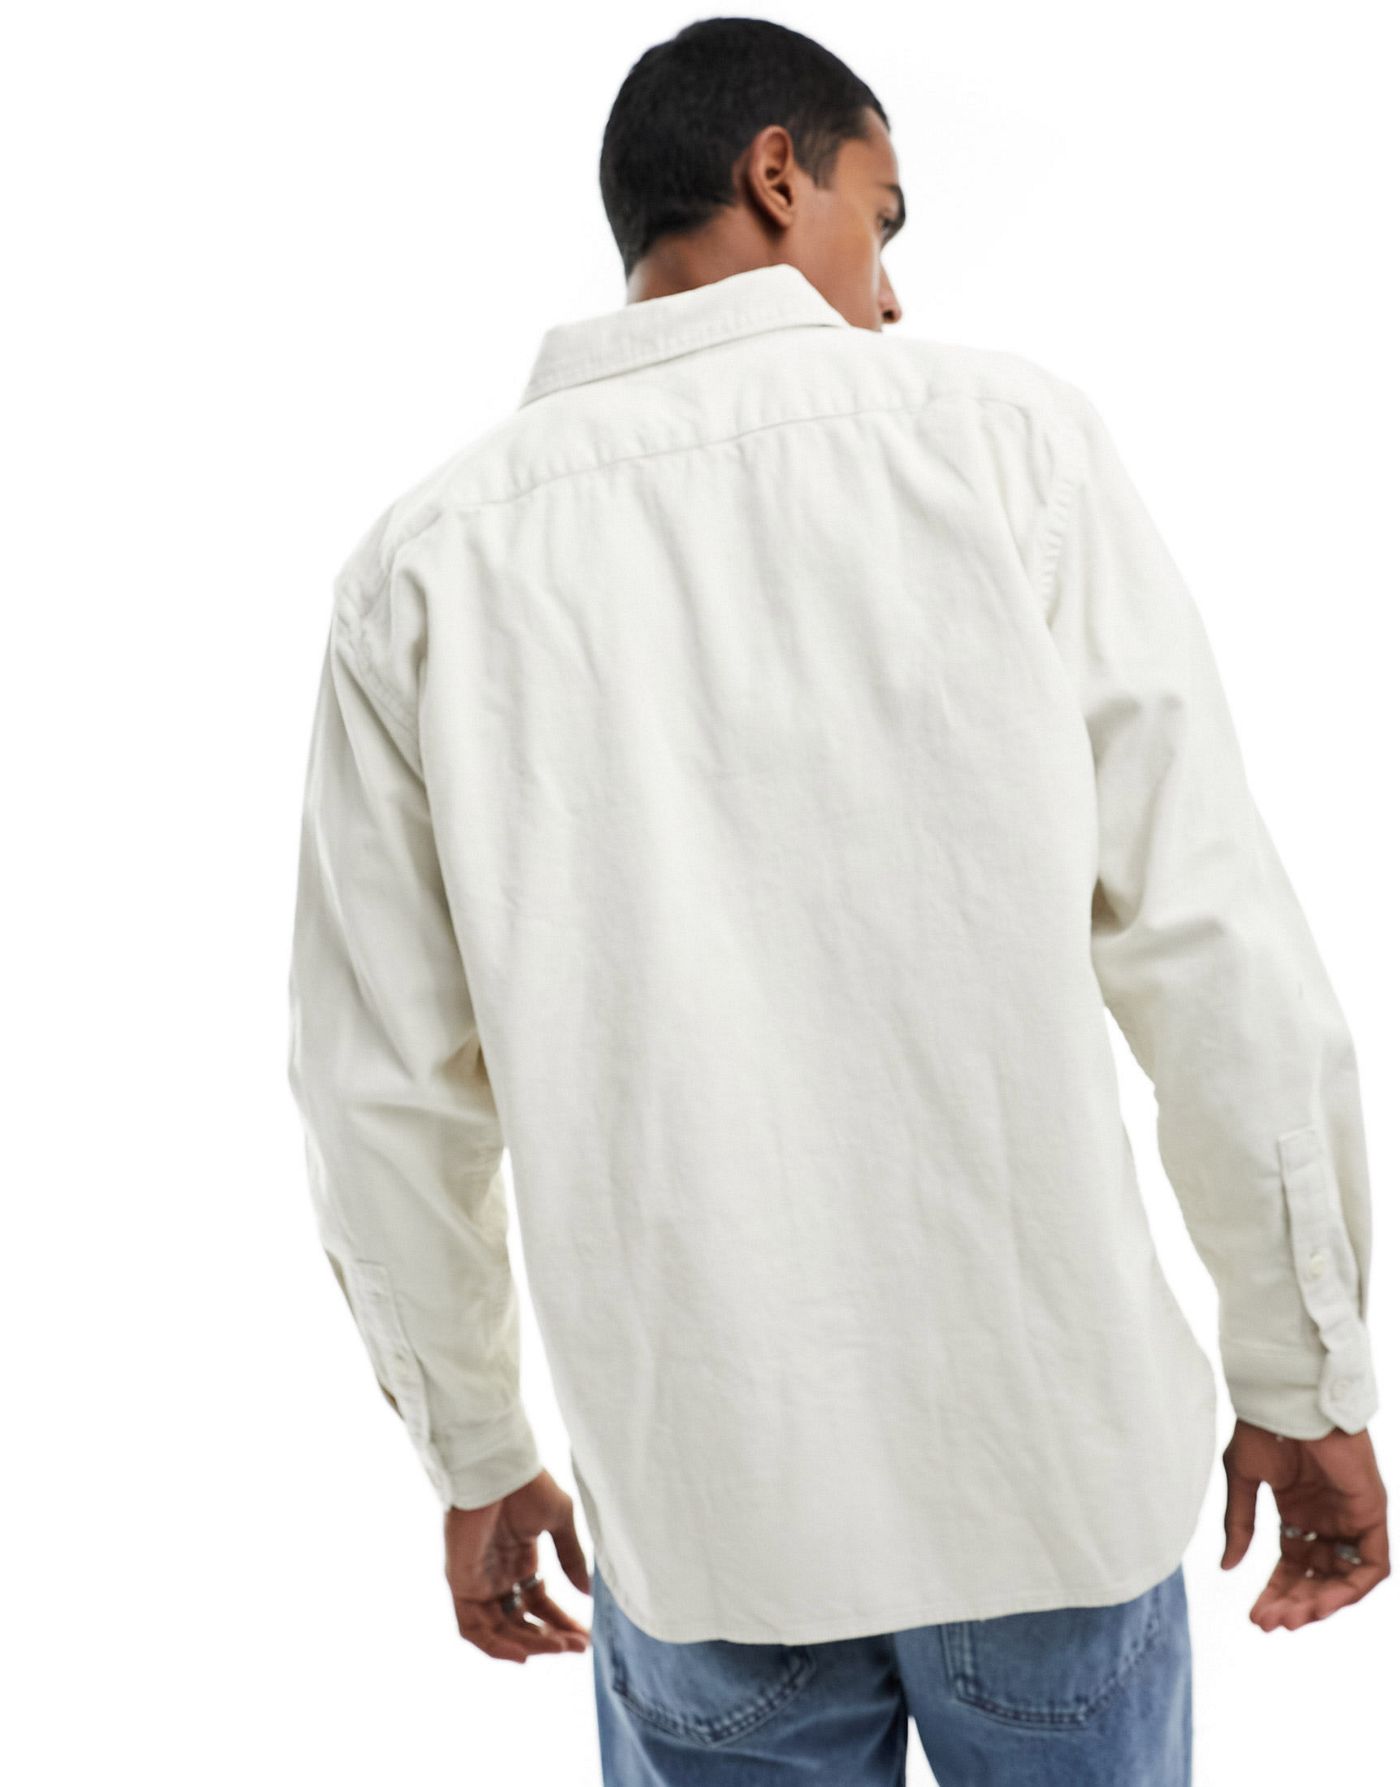 Levi's Jackson Worker shirt in cream